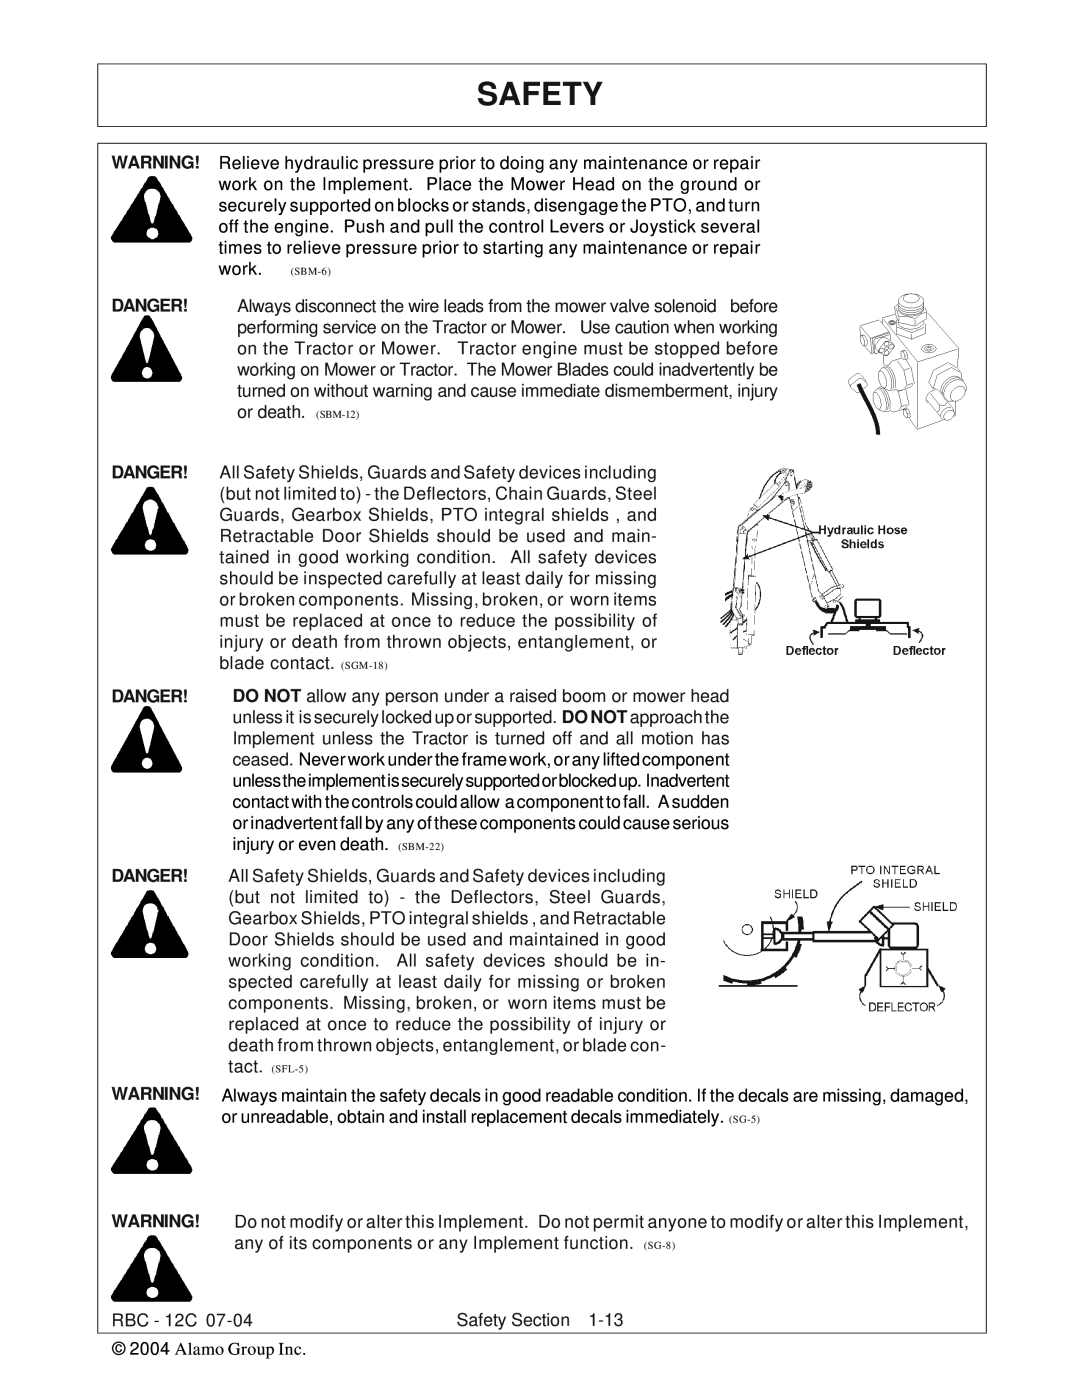 Tiger Products Co., Ltd RBF-12C manual Safety, Danger 